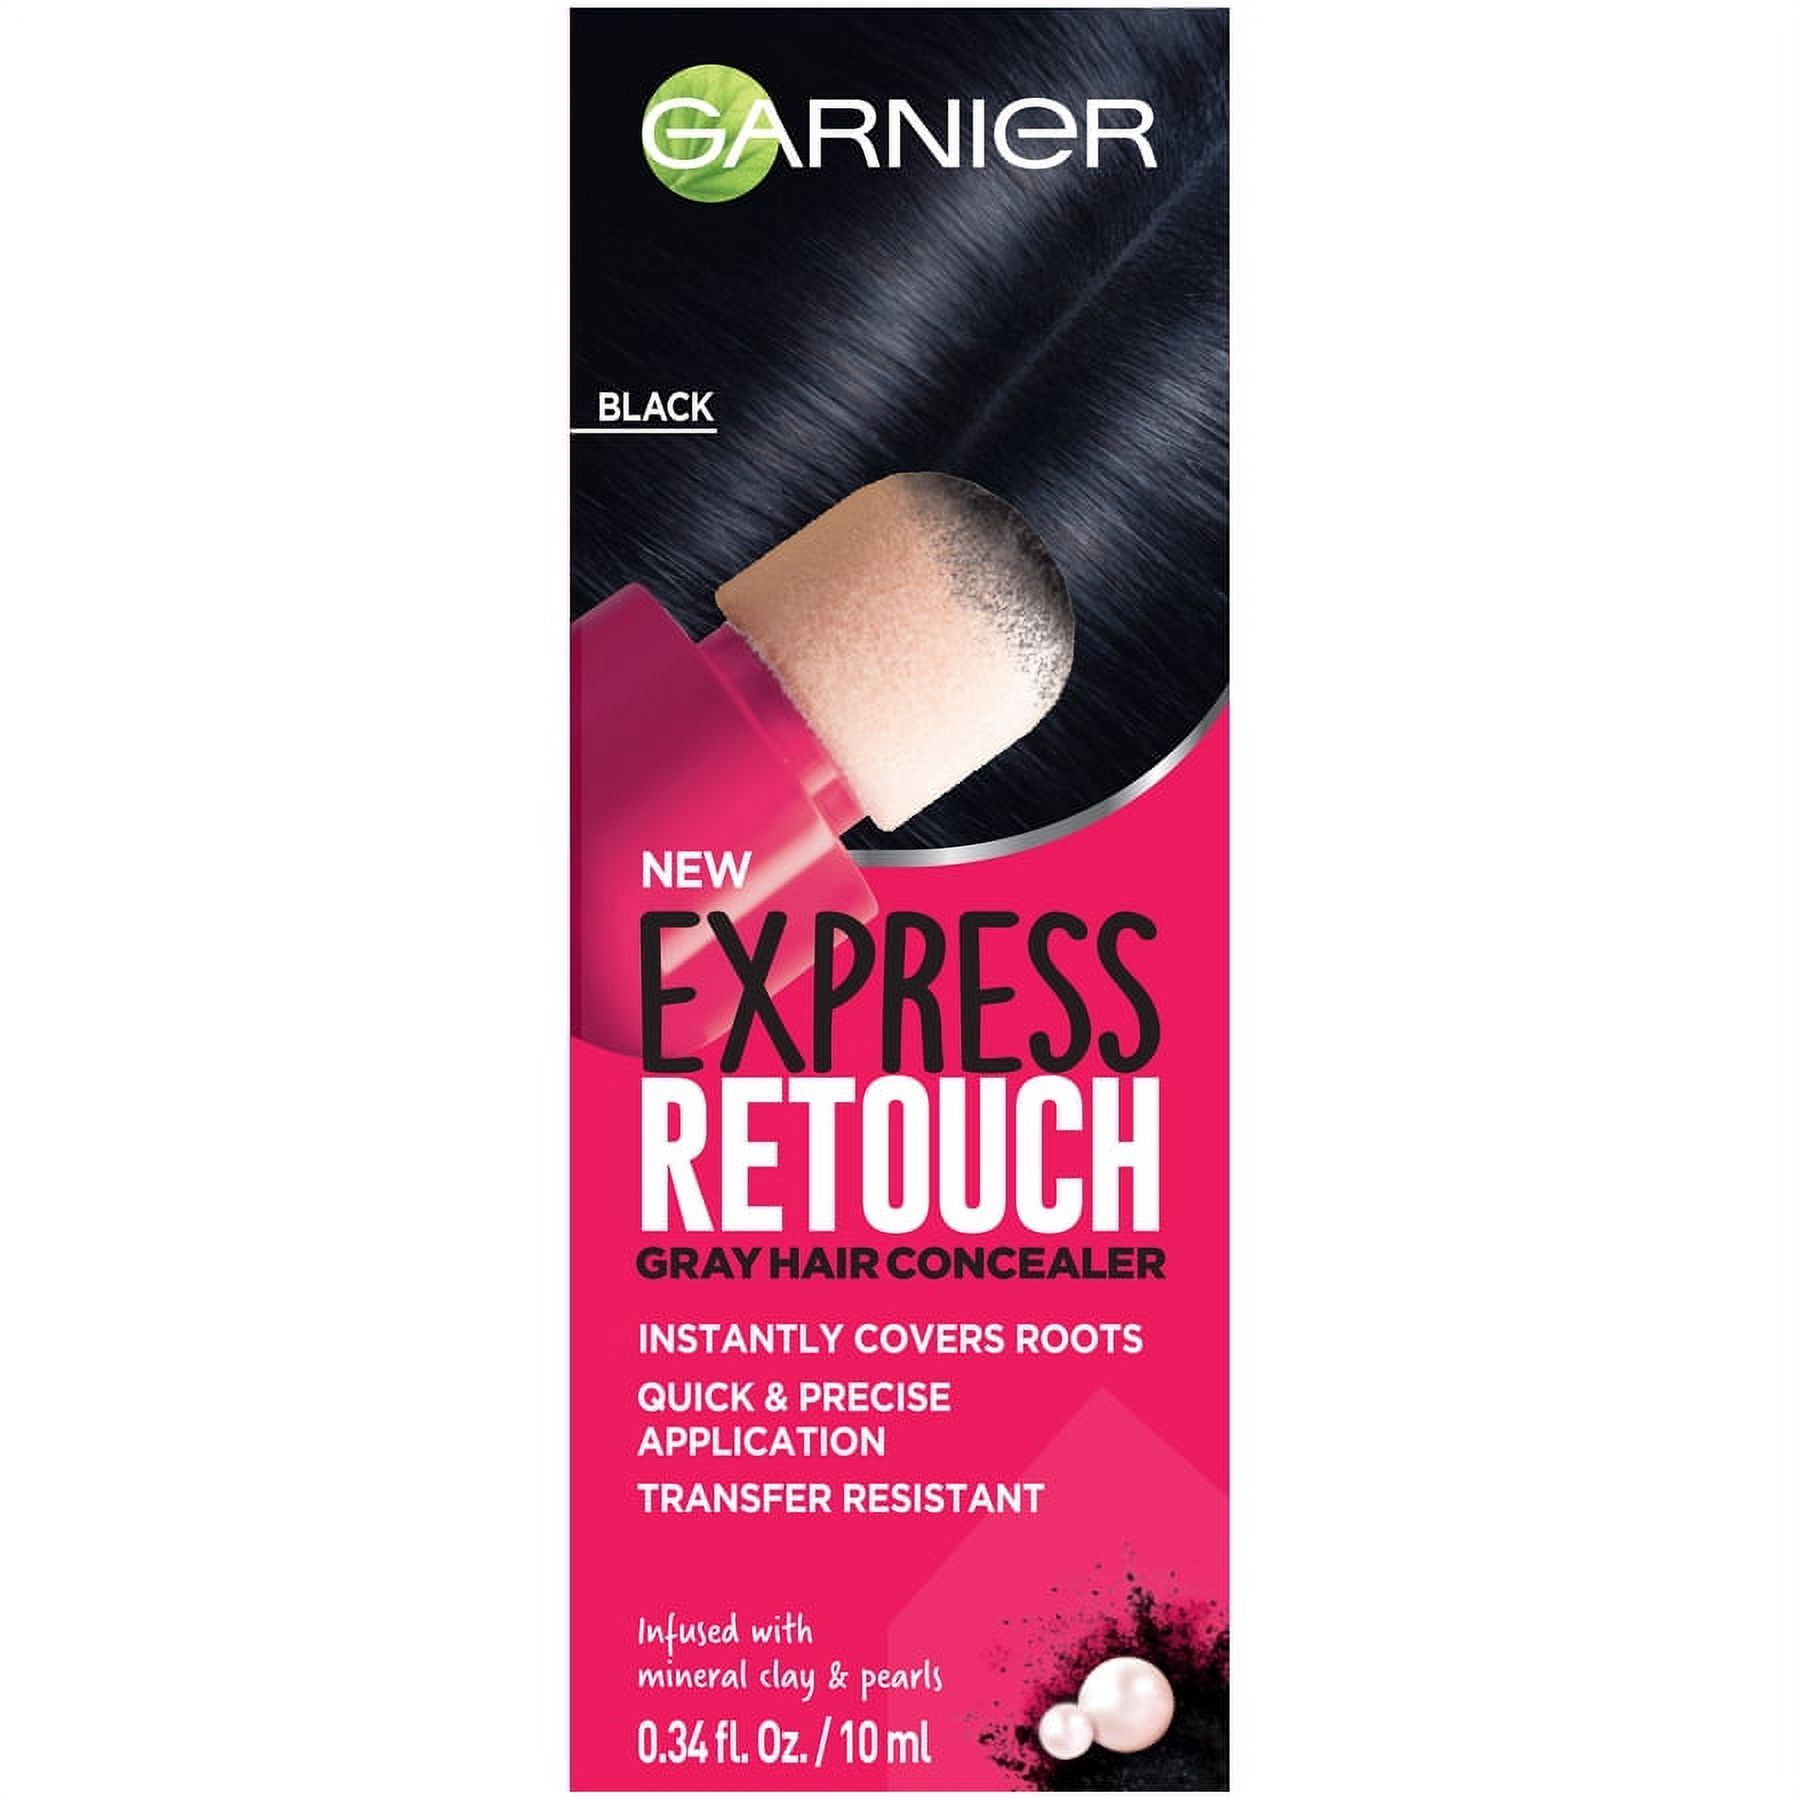 Garnier Express Retouch Gray Hair Concealer, Instant Coverage, Black, 0.34 fl oz - image 1 of 12